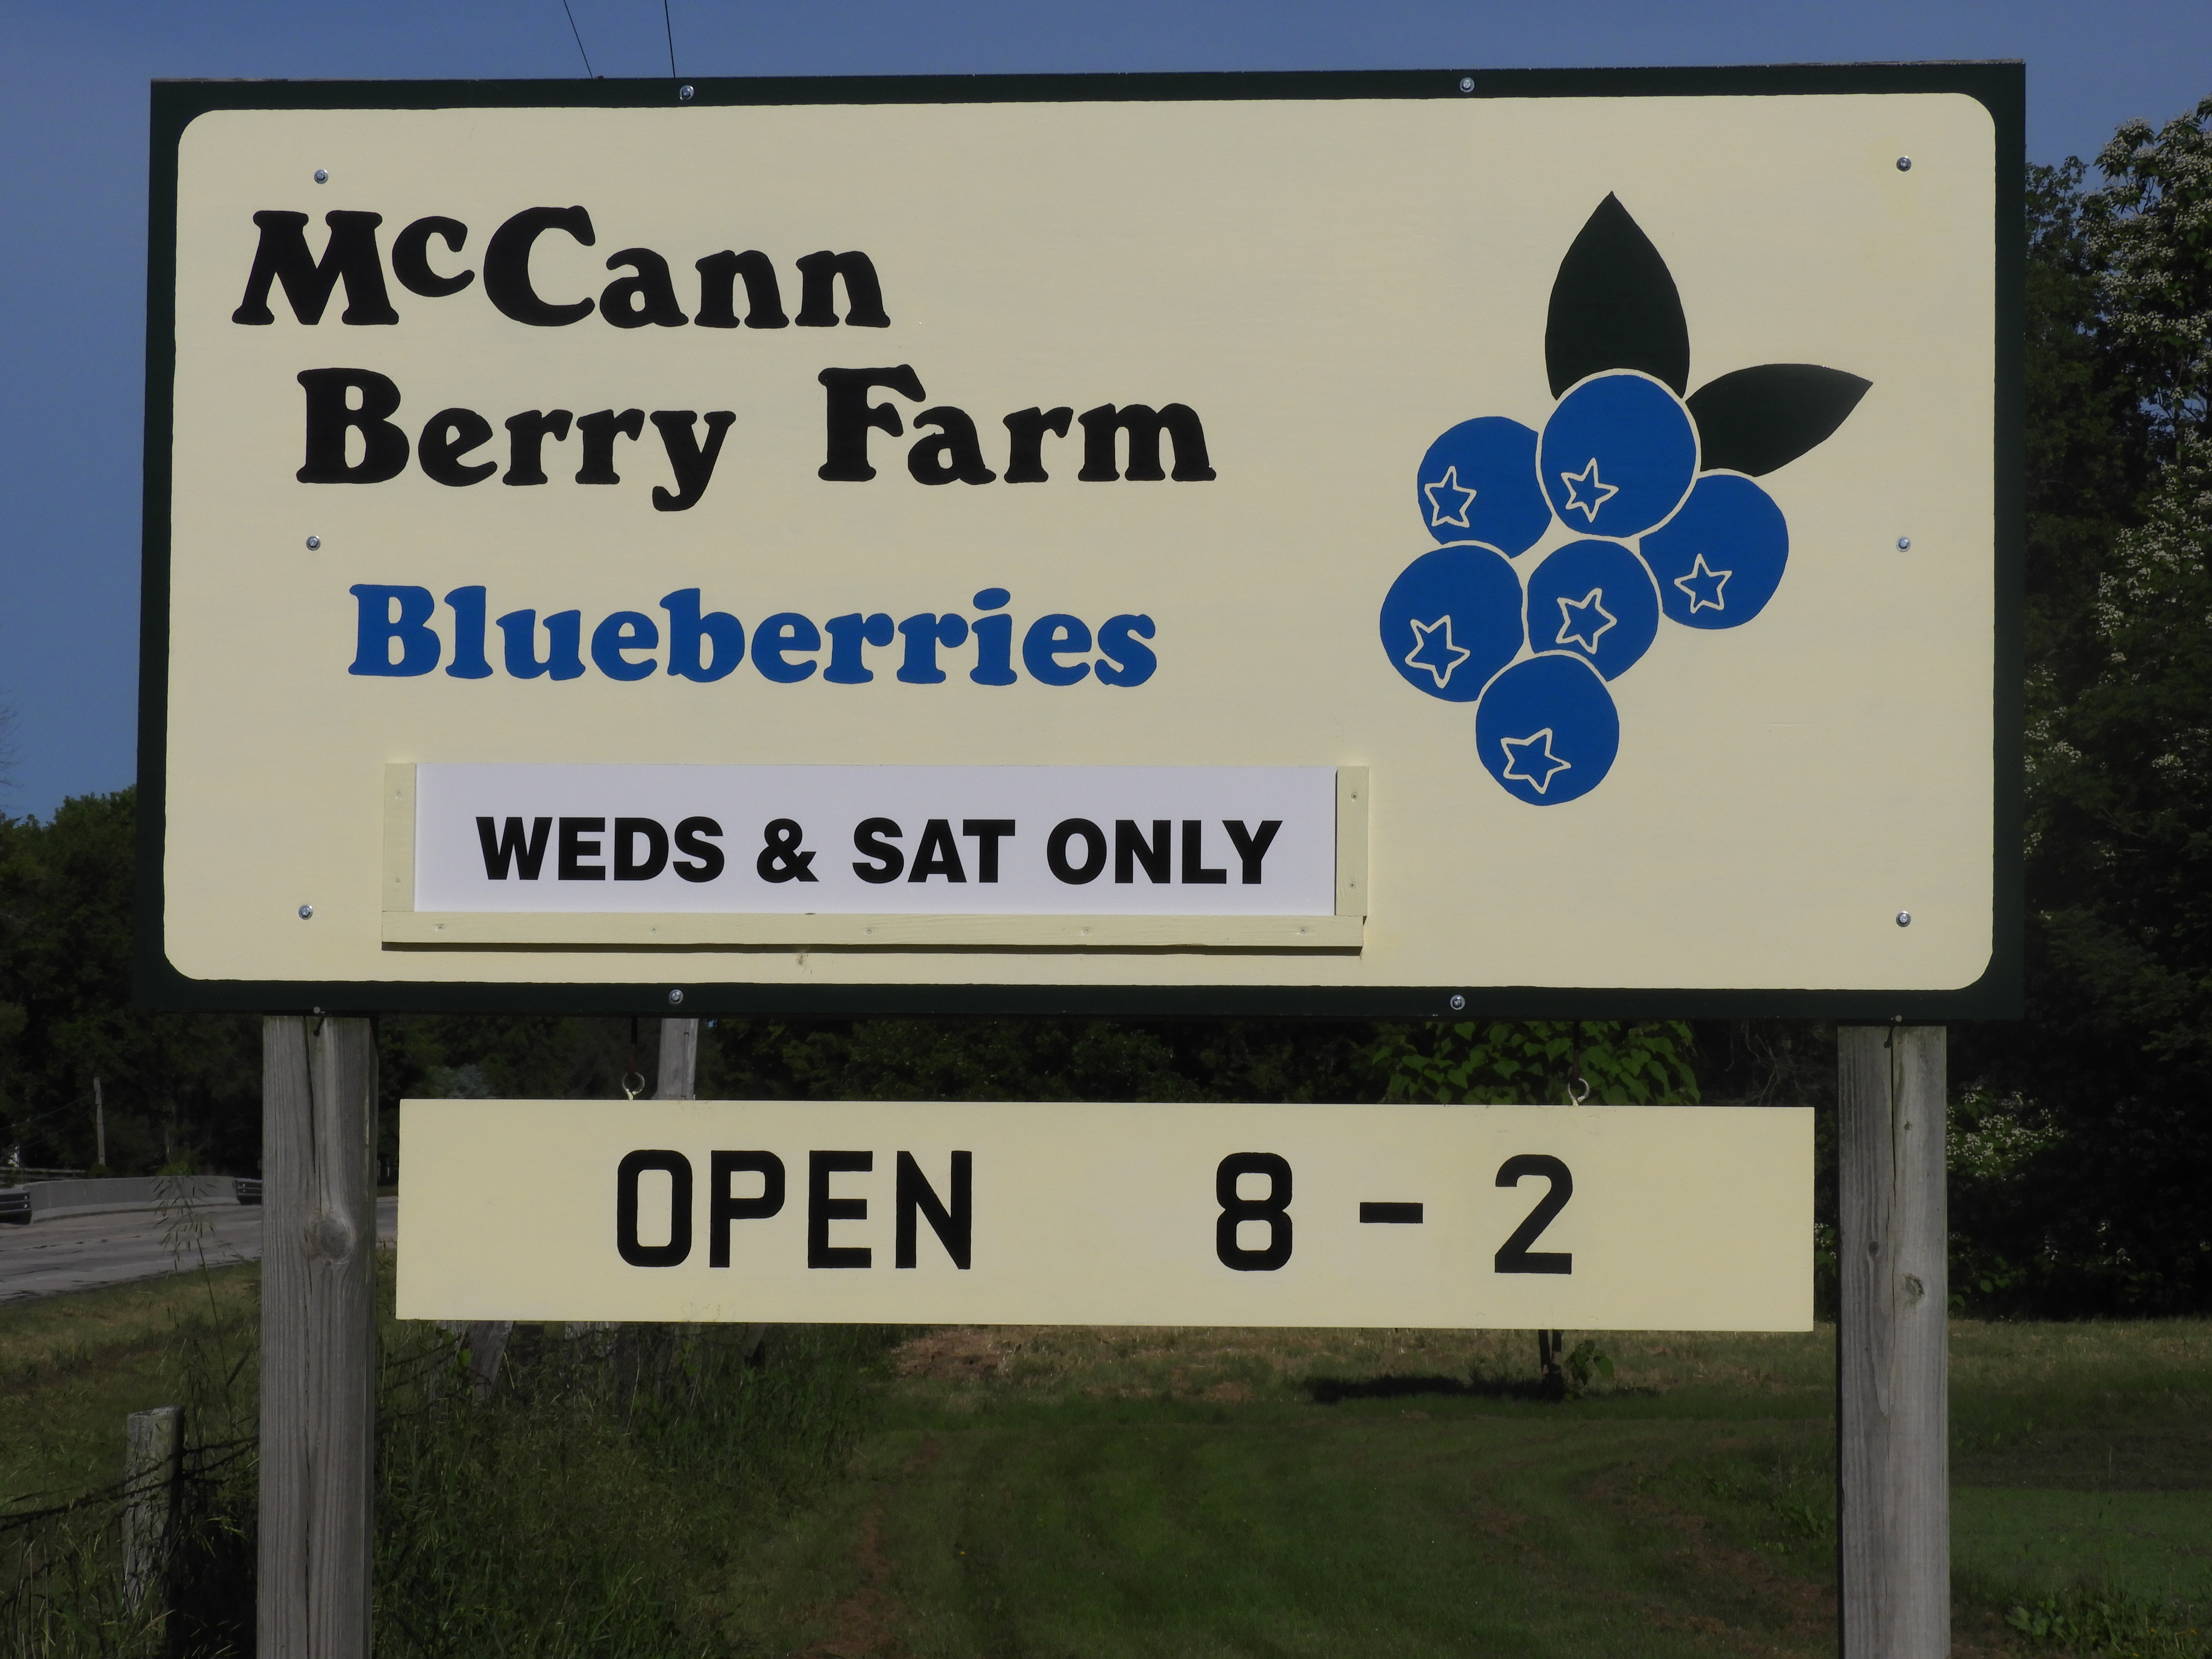 McCann Berry Farm